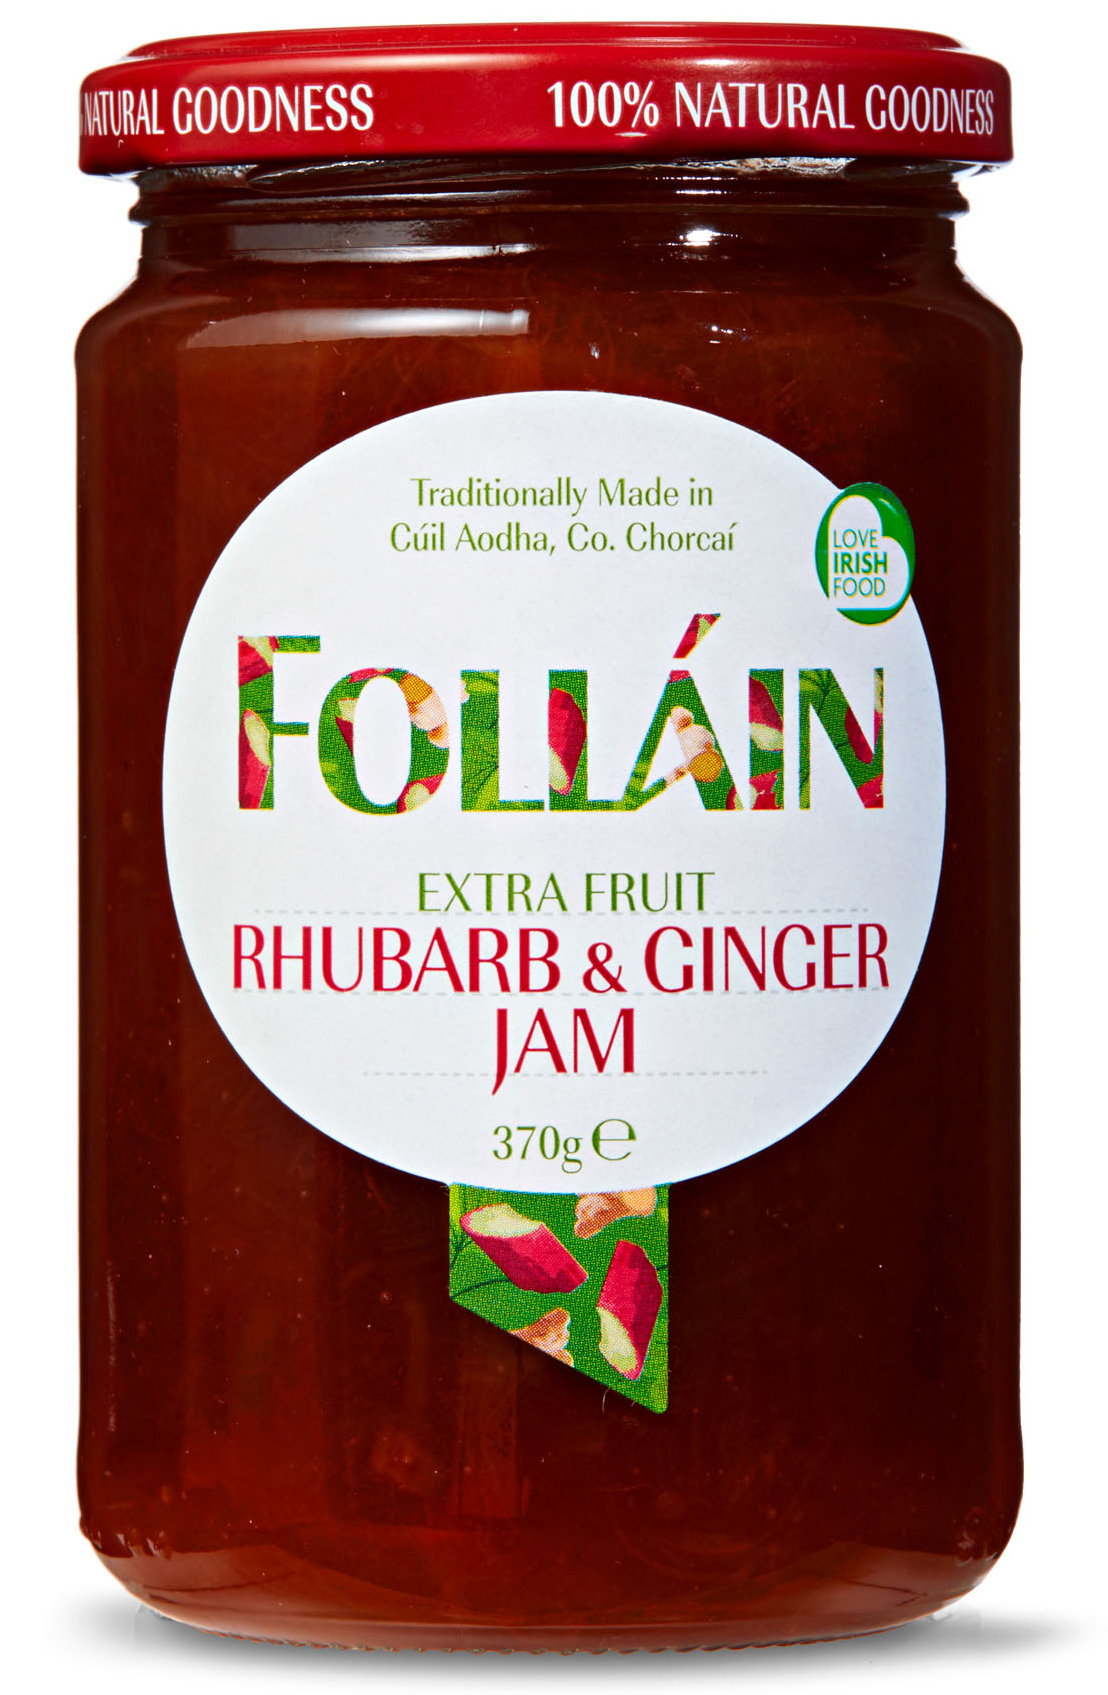 Folláin Rhubarb & Ginger Jam